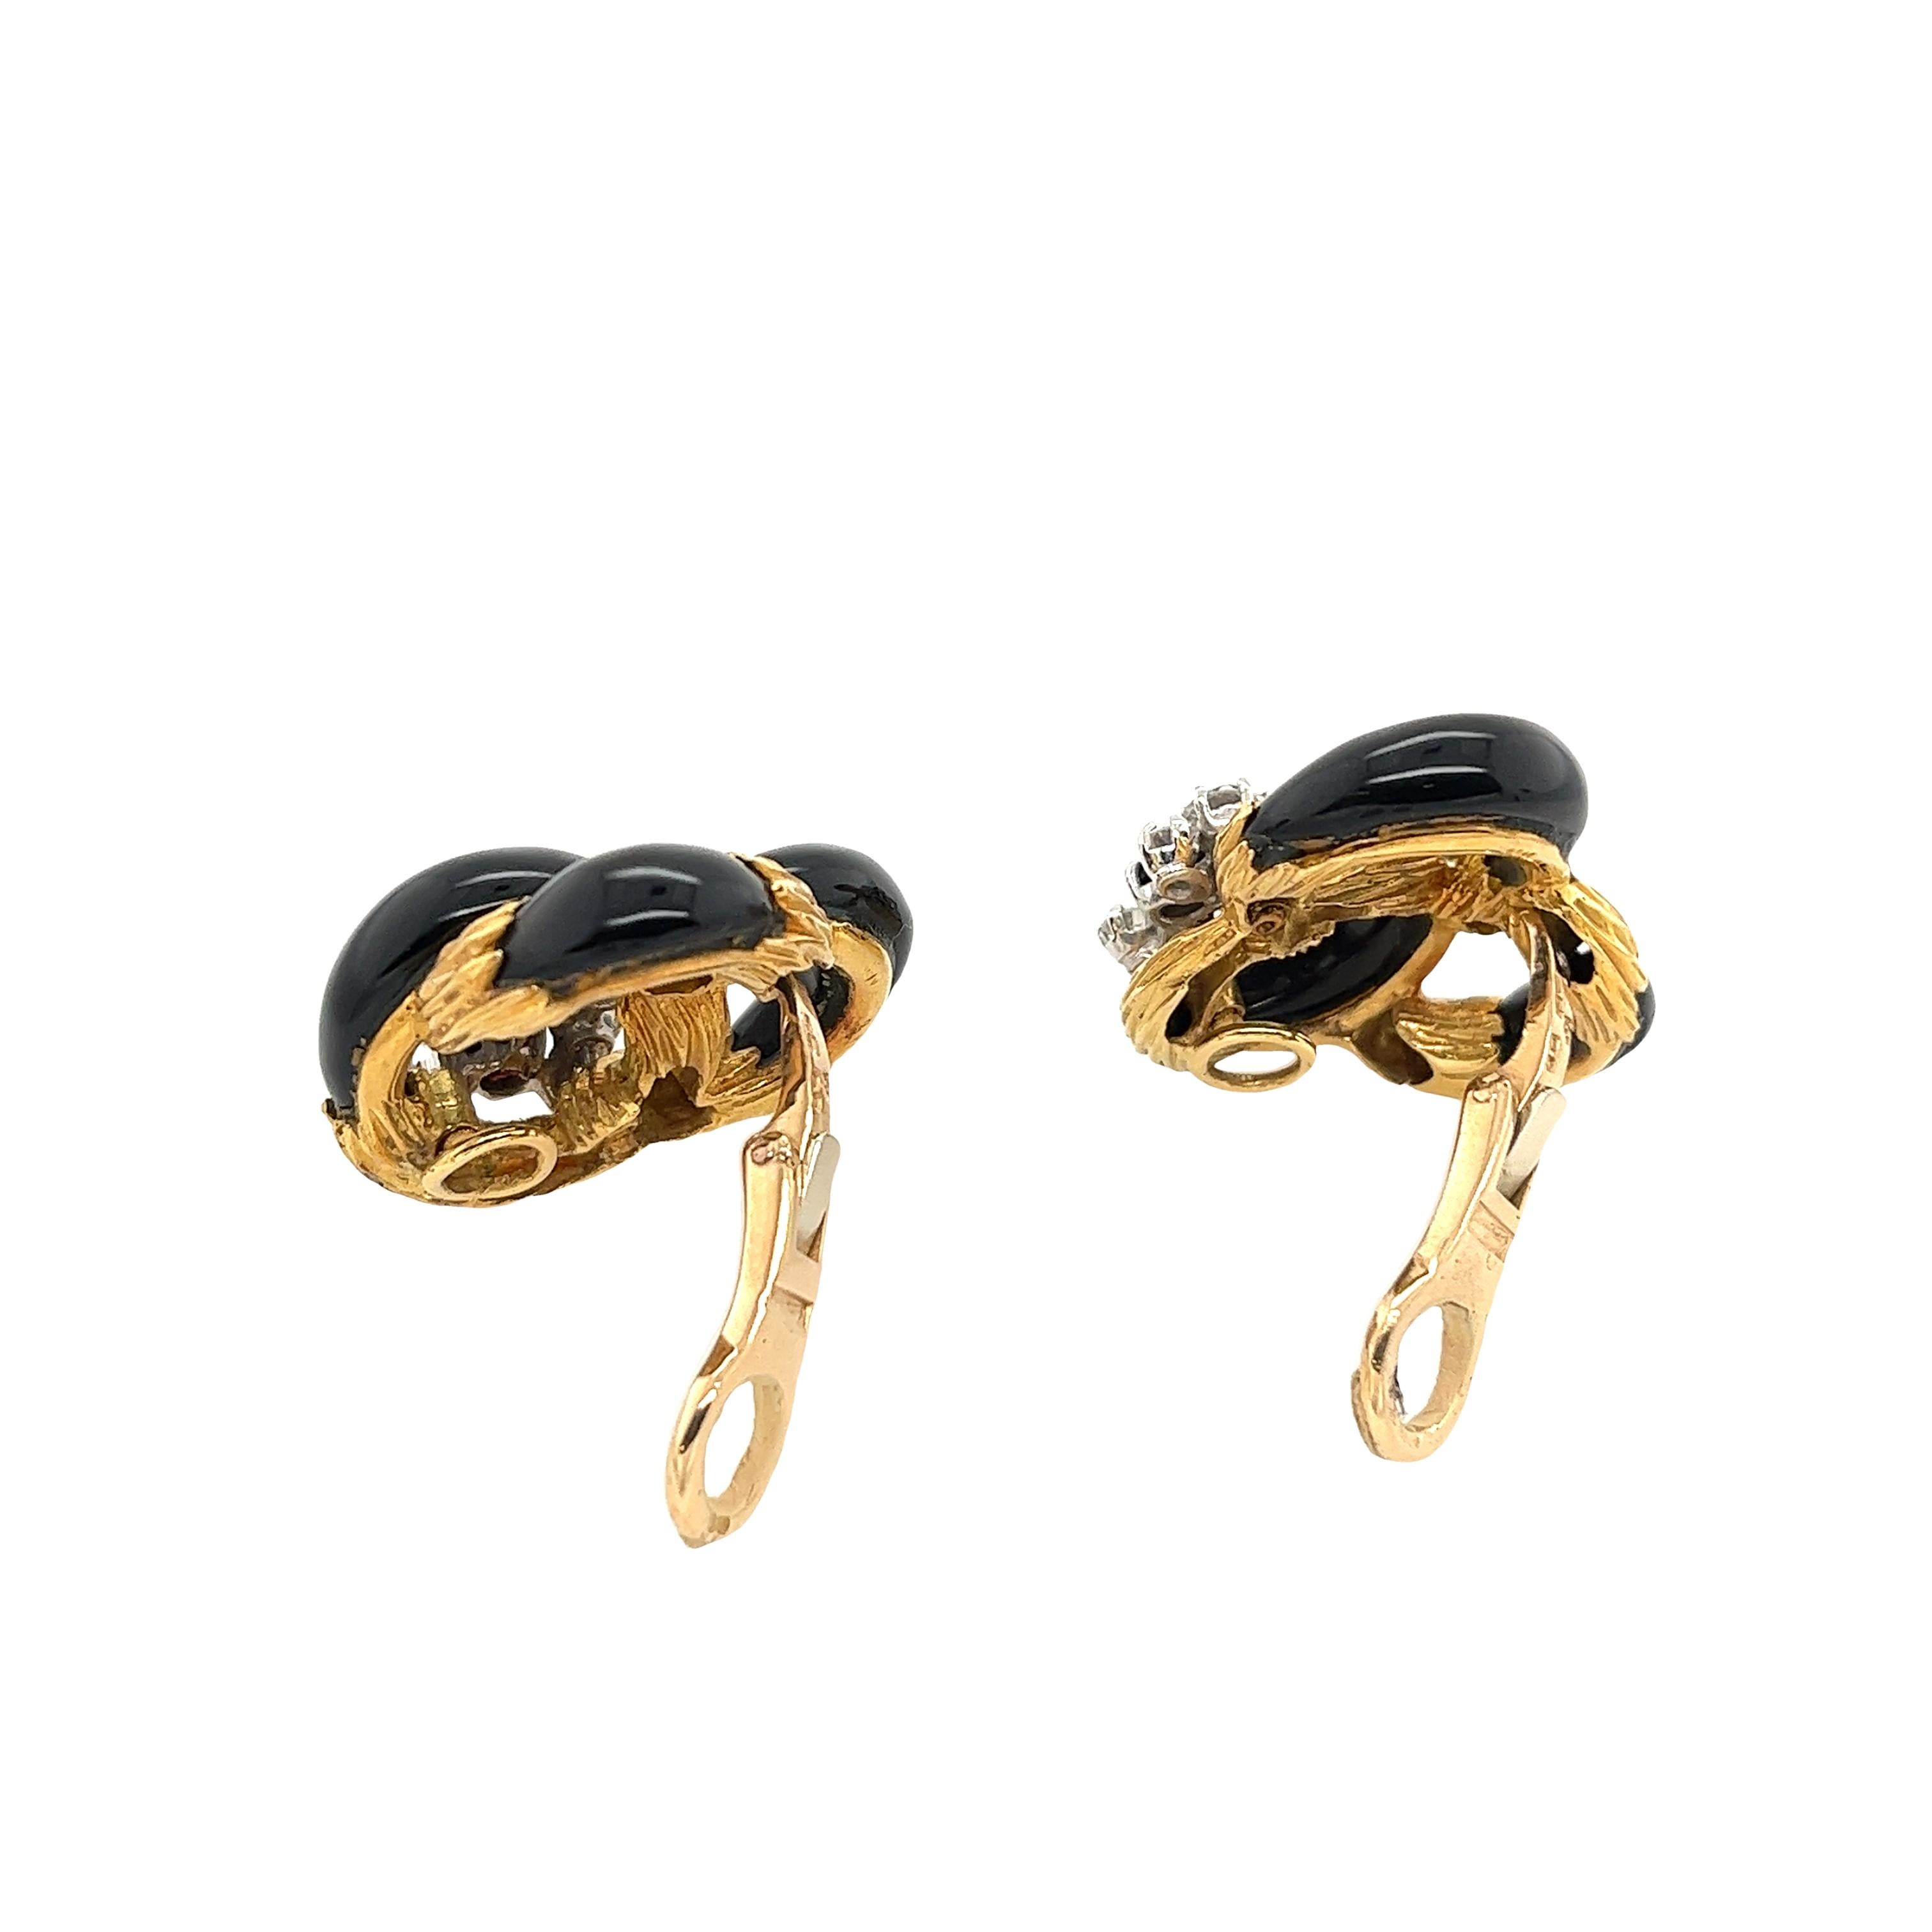 Round Cut Kutchinsky Vintage Diamond Earrings Black Enamel Set In 18ct Yellow Gold For Sale